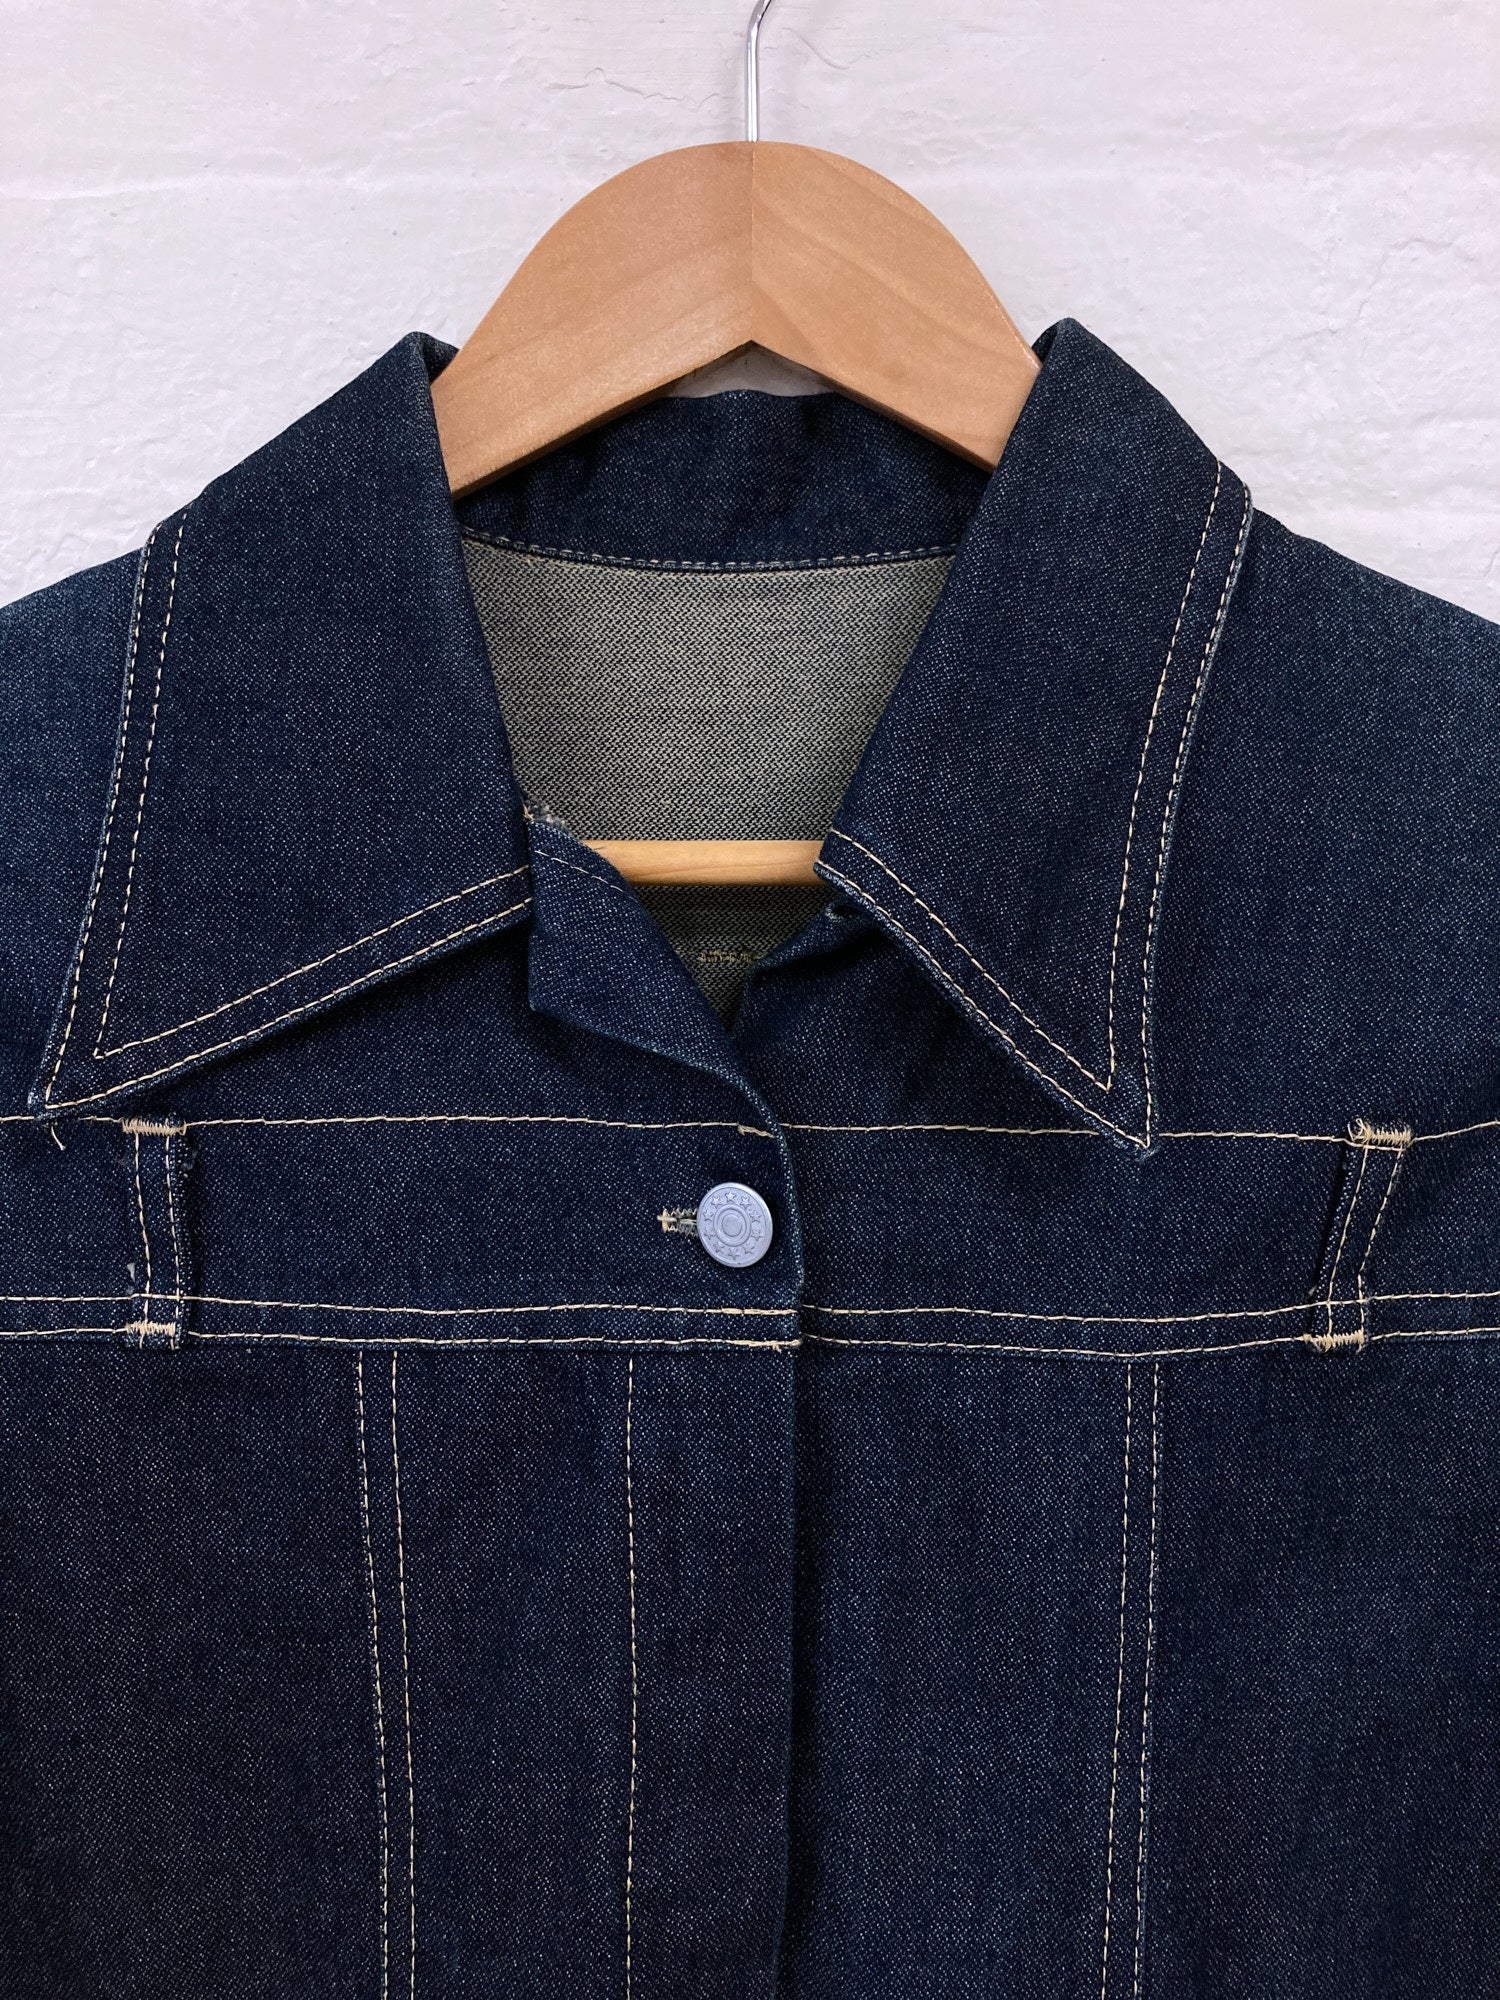 WooXoom Paris 1990s indigo cotton reconstructed denim jacket - 1 S